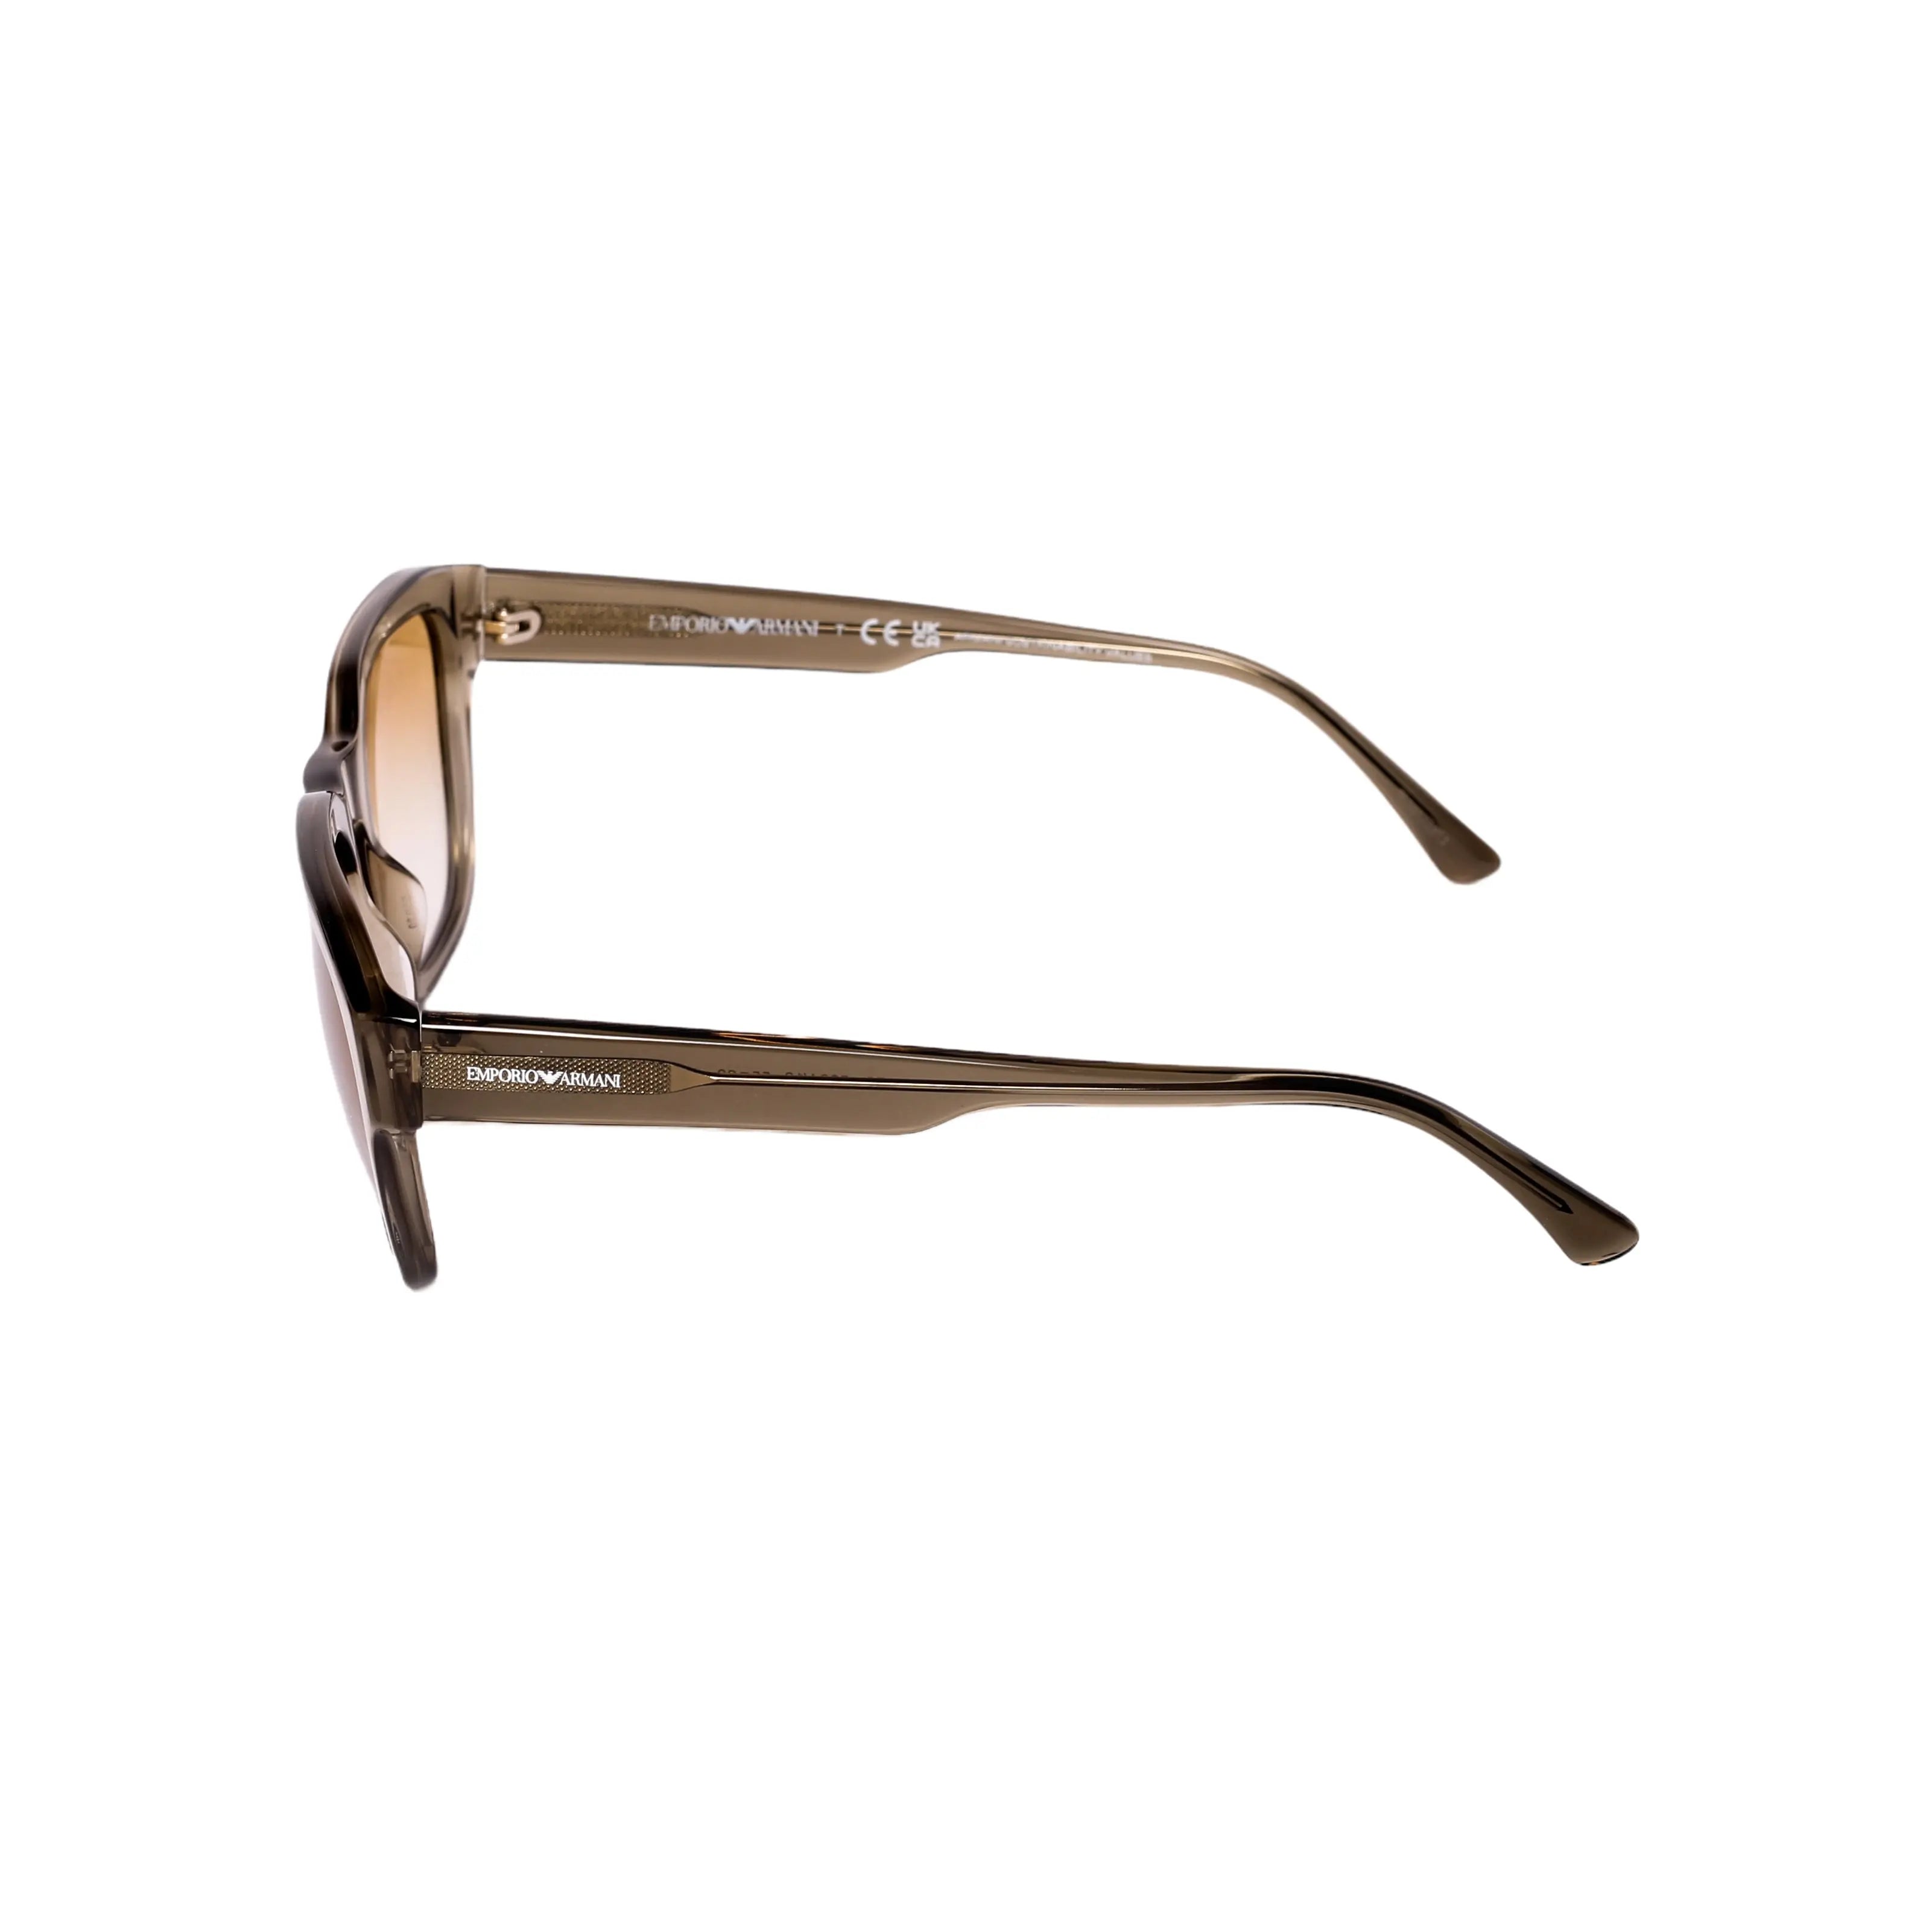 Emporio Armani-EA 4175-55-5884 Sunglasses - Premium Sunglasses from Emporio Armani - Just Rs. 11890! Shop now at Laxmi Opticians